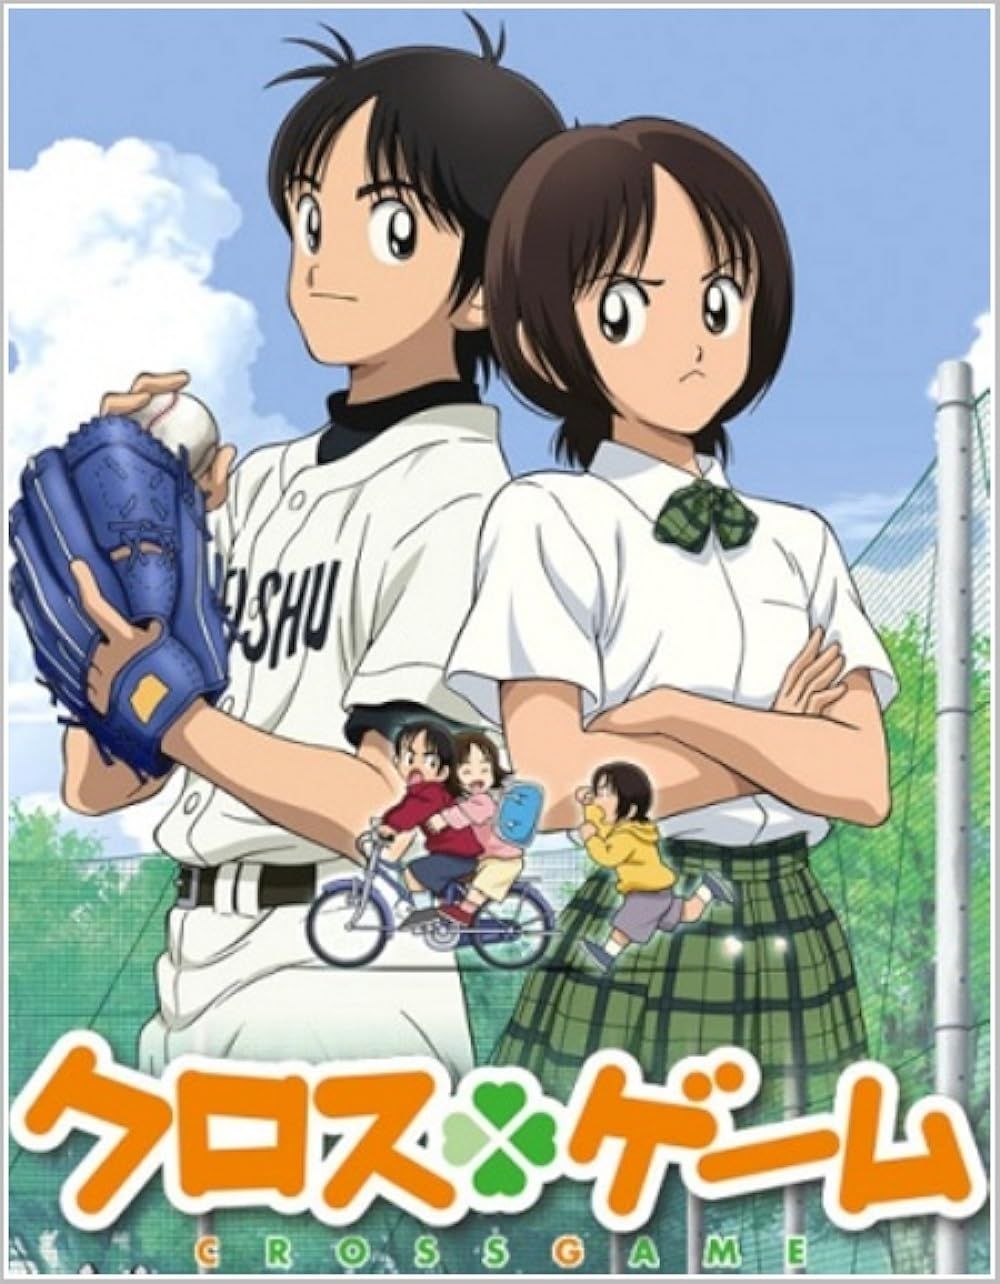 Cross Game anime poster